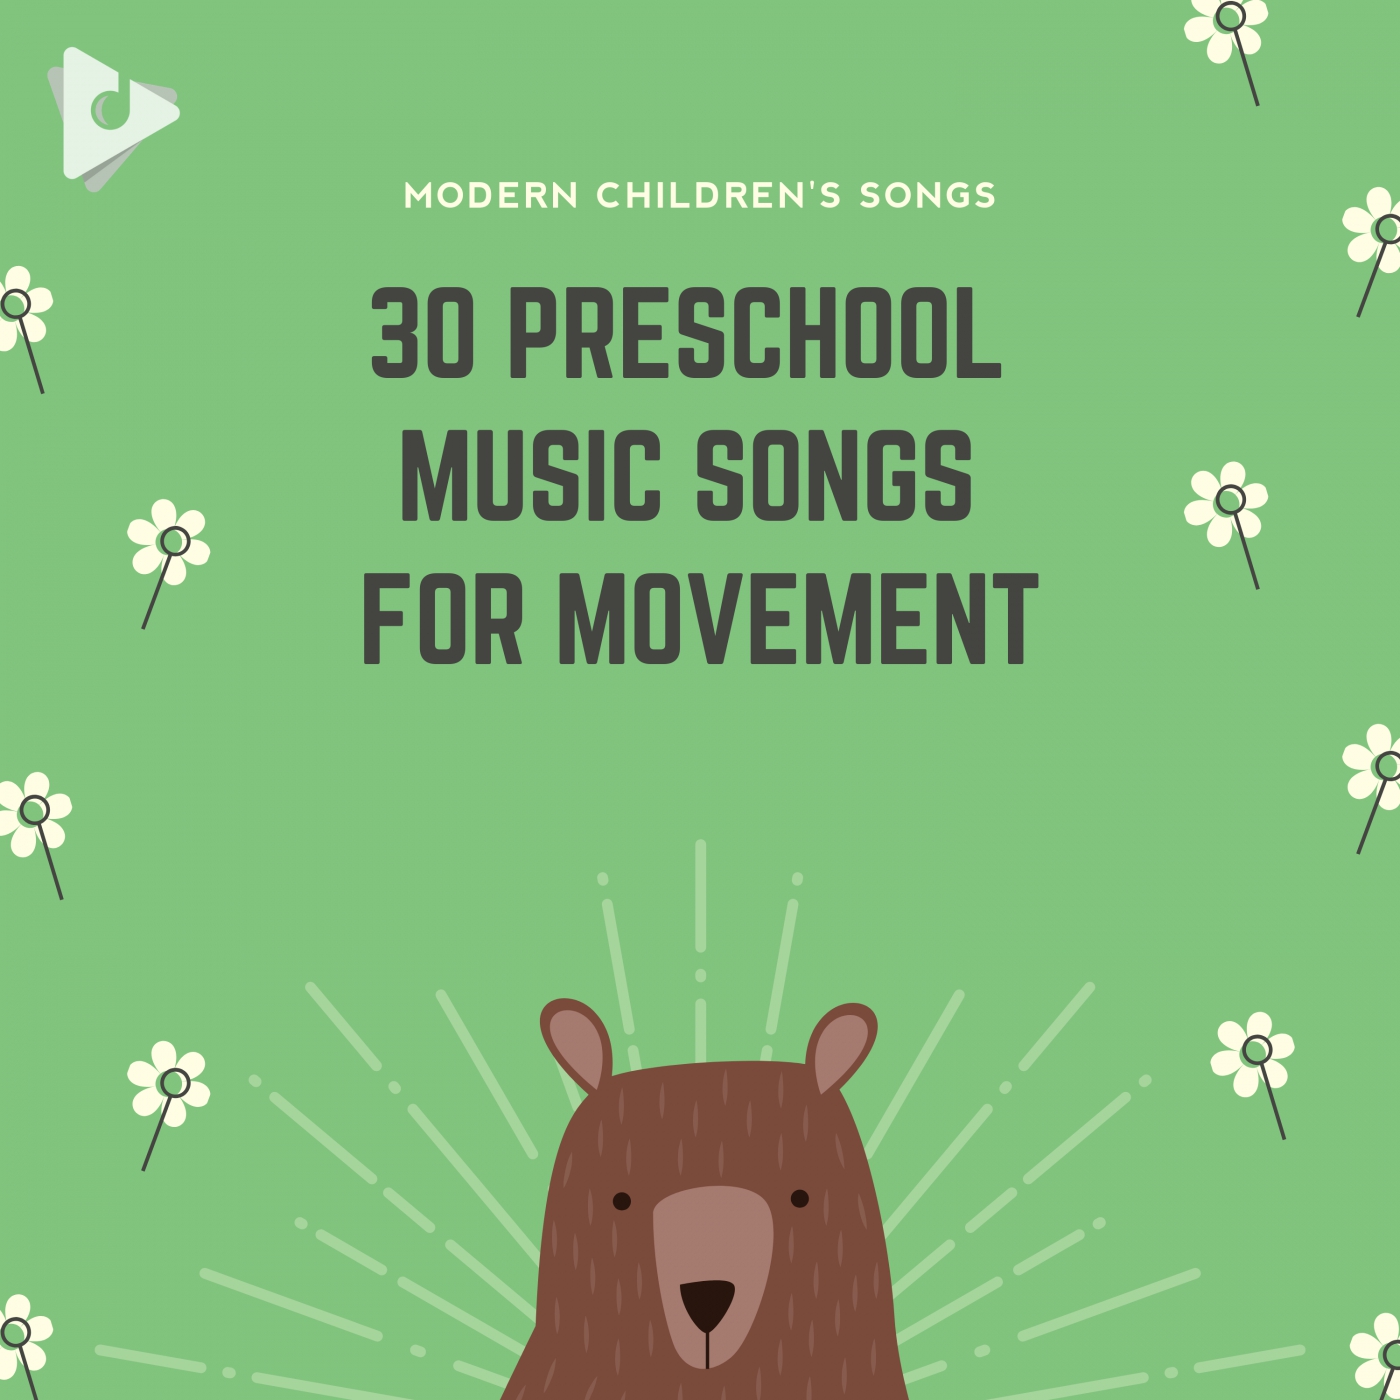 30 Preschool Music Songs for Movement